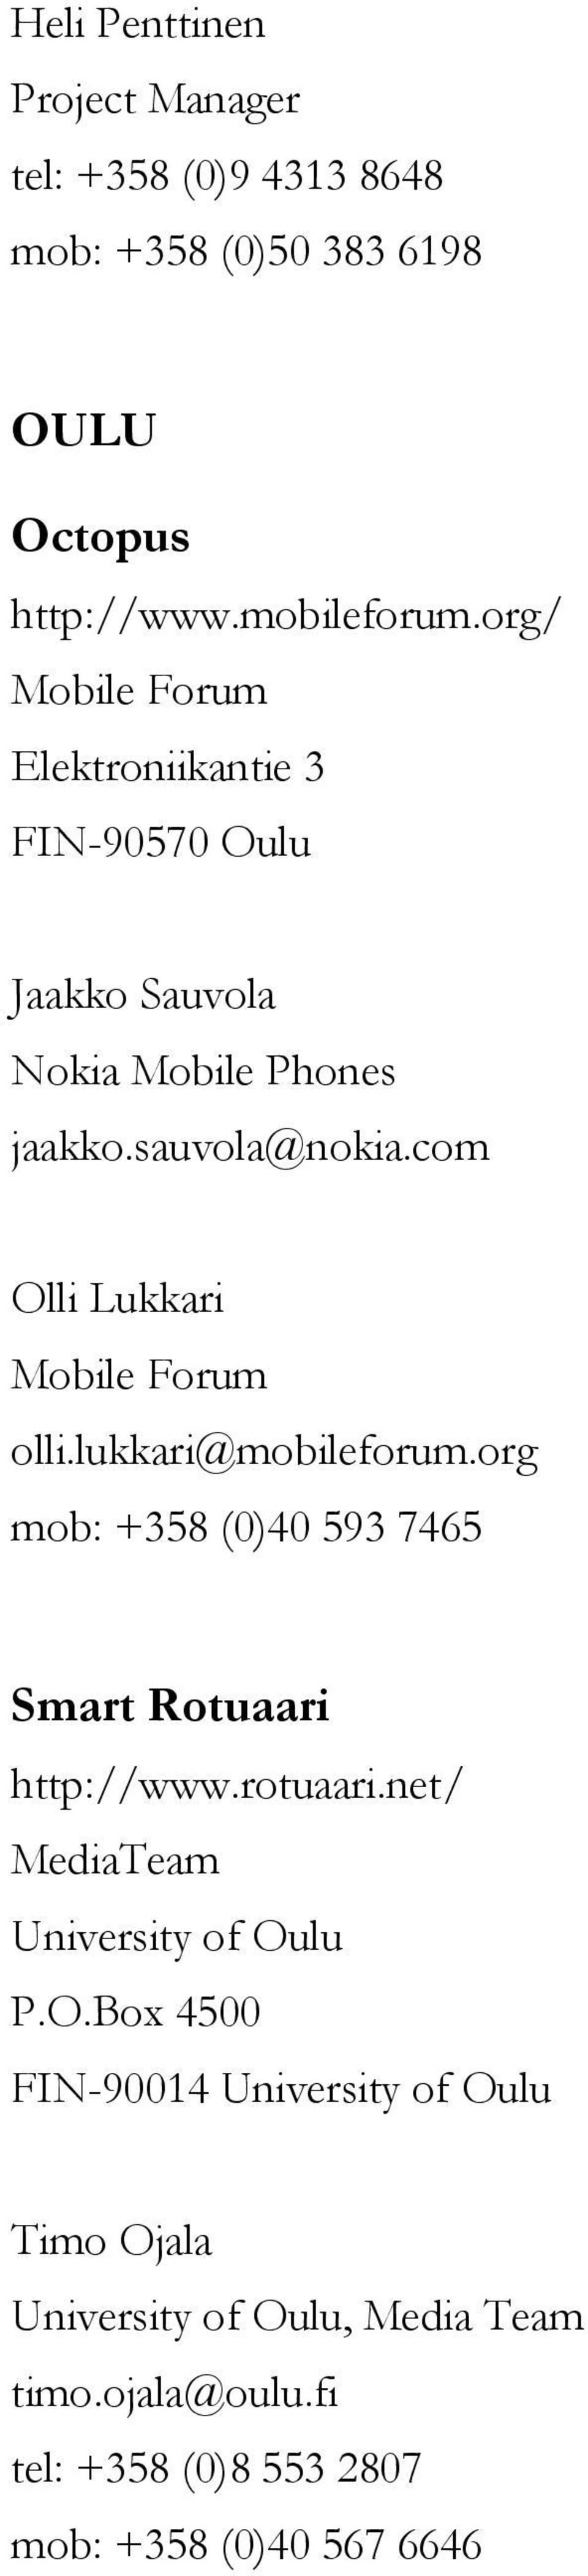 com Olli Lukkari Mobile Forum olli.lukkari@mobileforum.org mob: +358 (0)40 593 7465 Smart Rotuaari http://www.rotuaari.